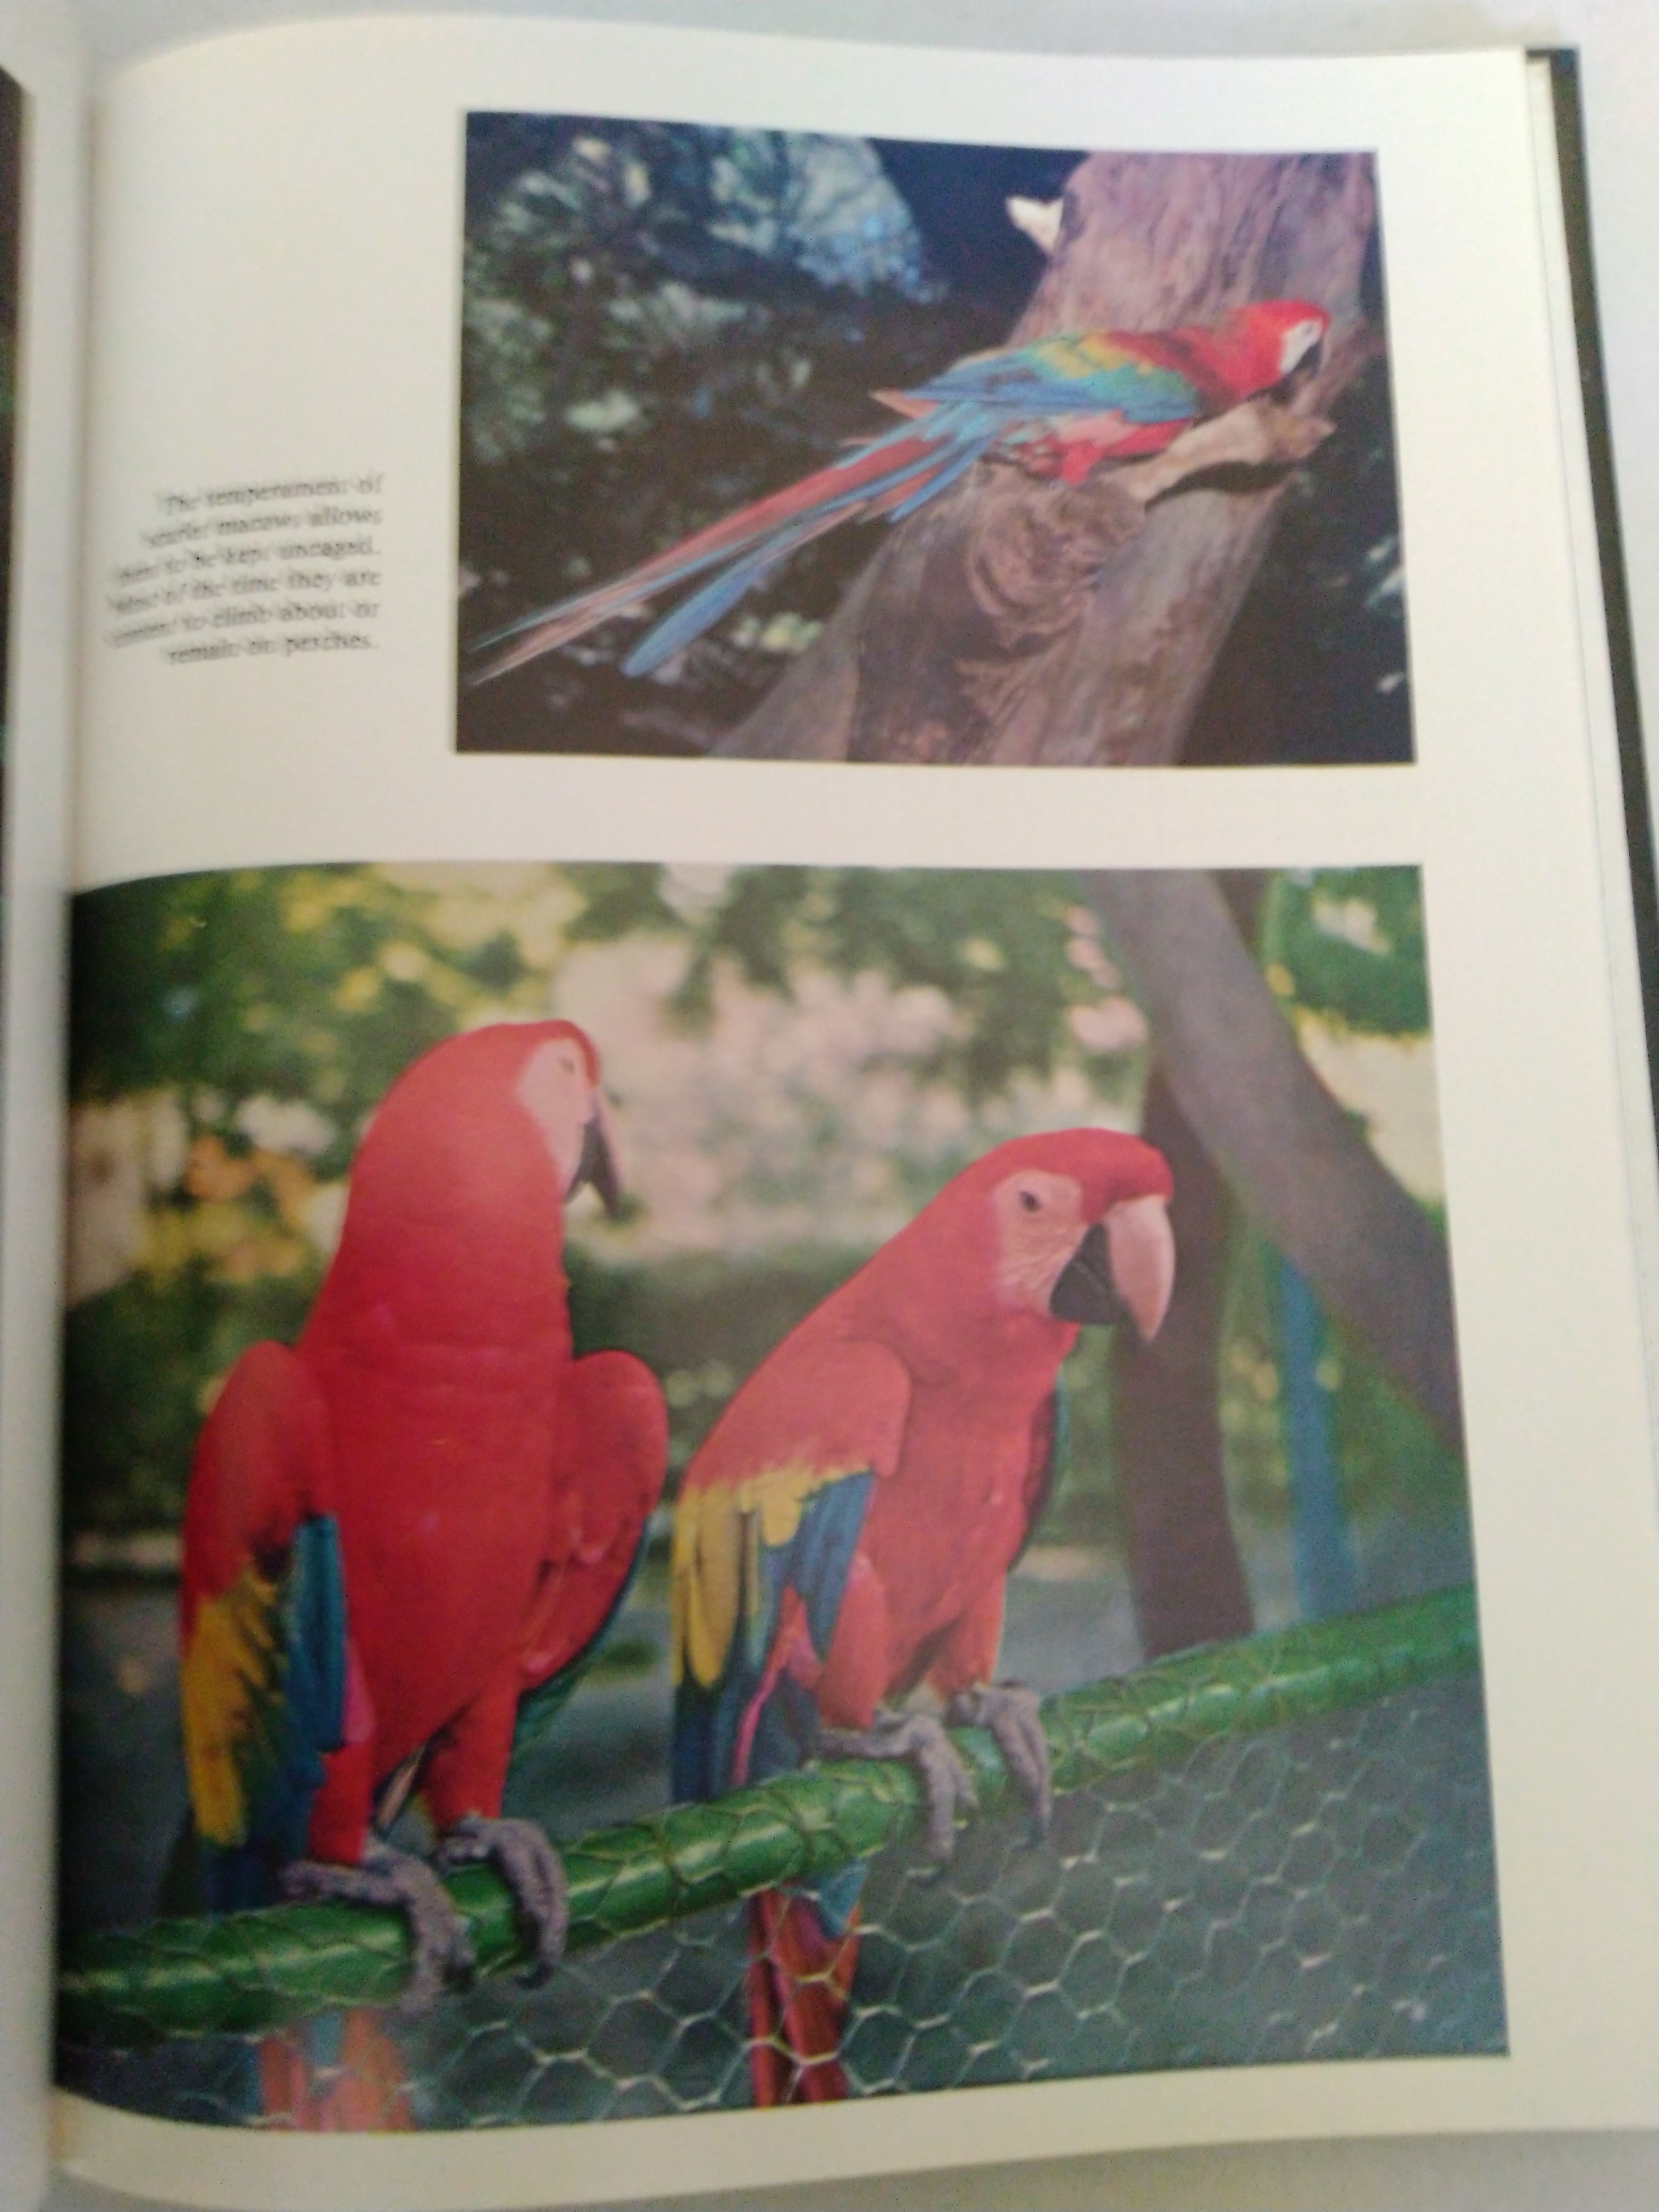 Handbook Of Macaws Dr, A.E. Decoteau